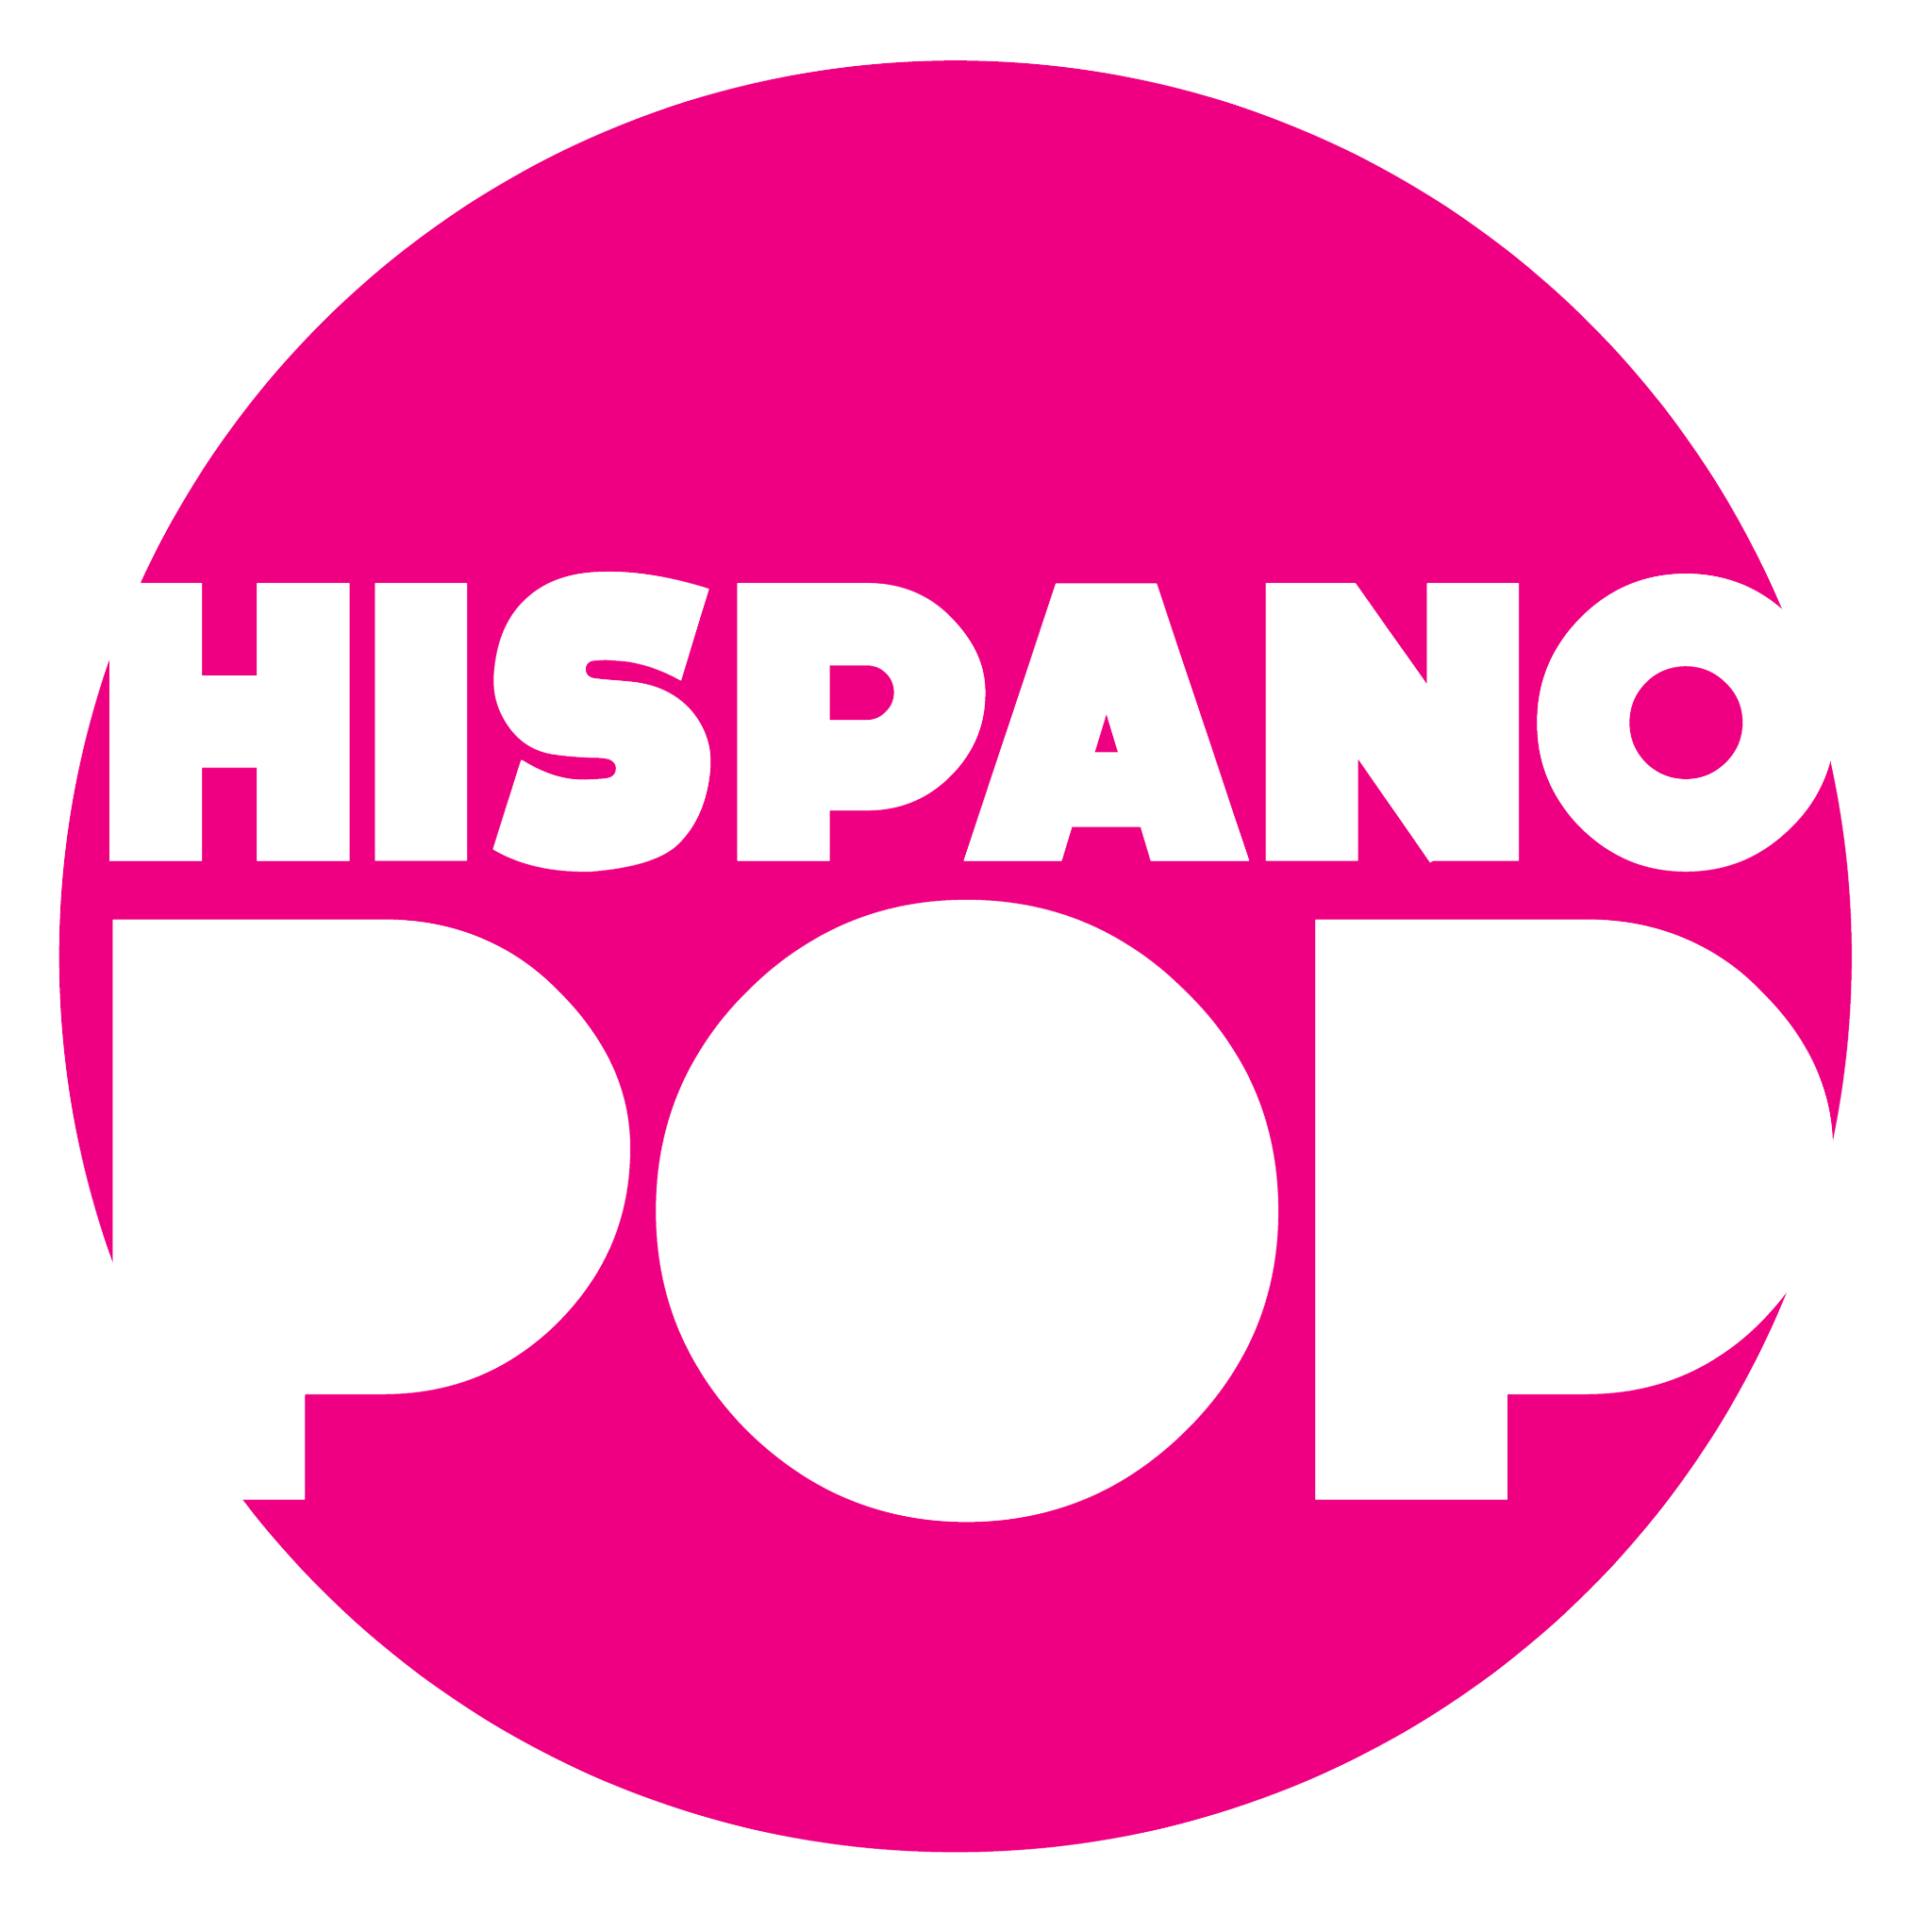 Hispano Pop